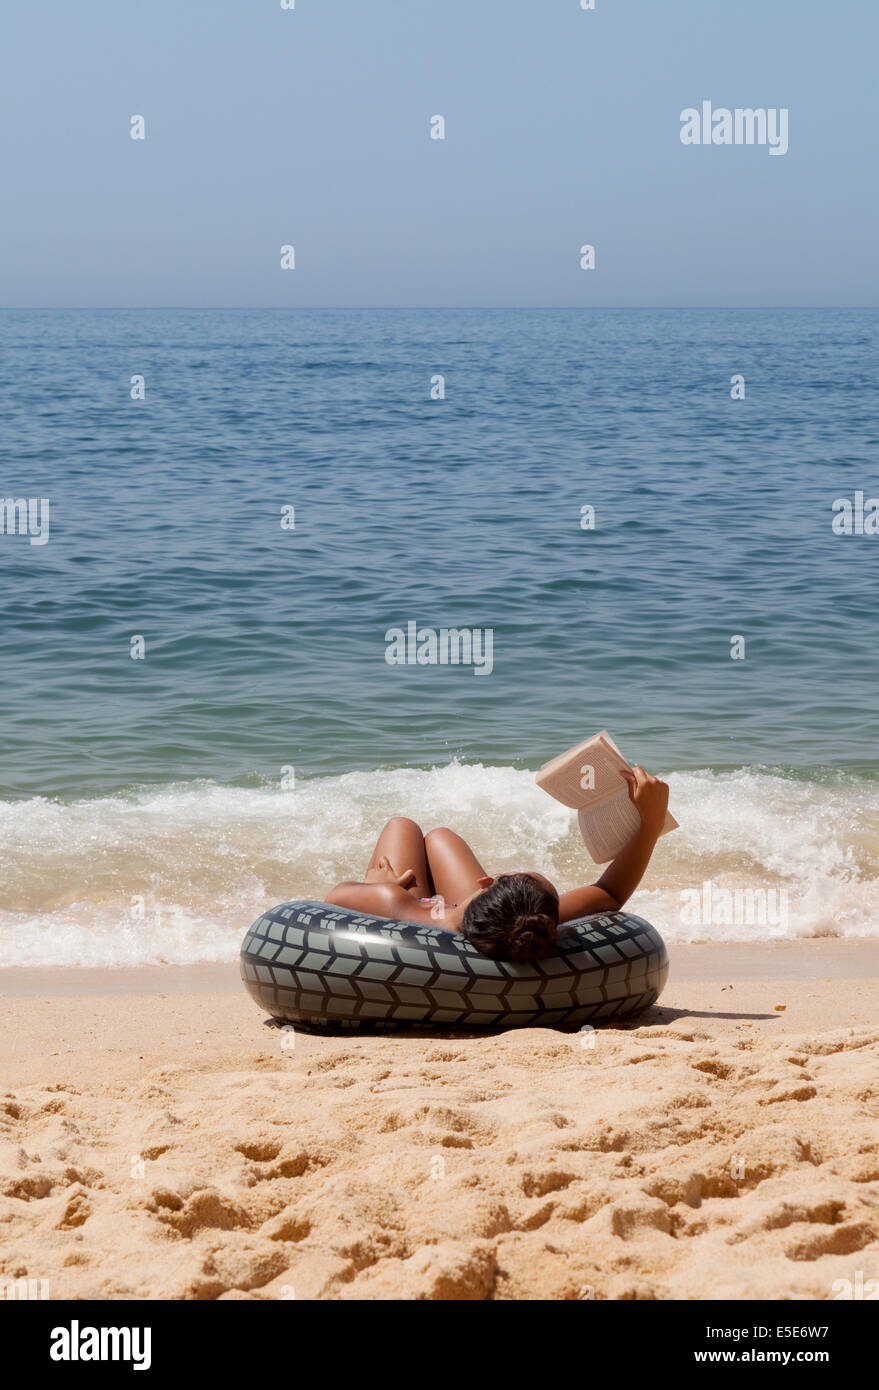 Frau, die sich im Urlaub entspannt, ein Buch am Strand am Ufer der Algarve, Portugal, Europa liest Stockfoto